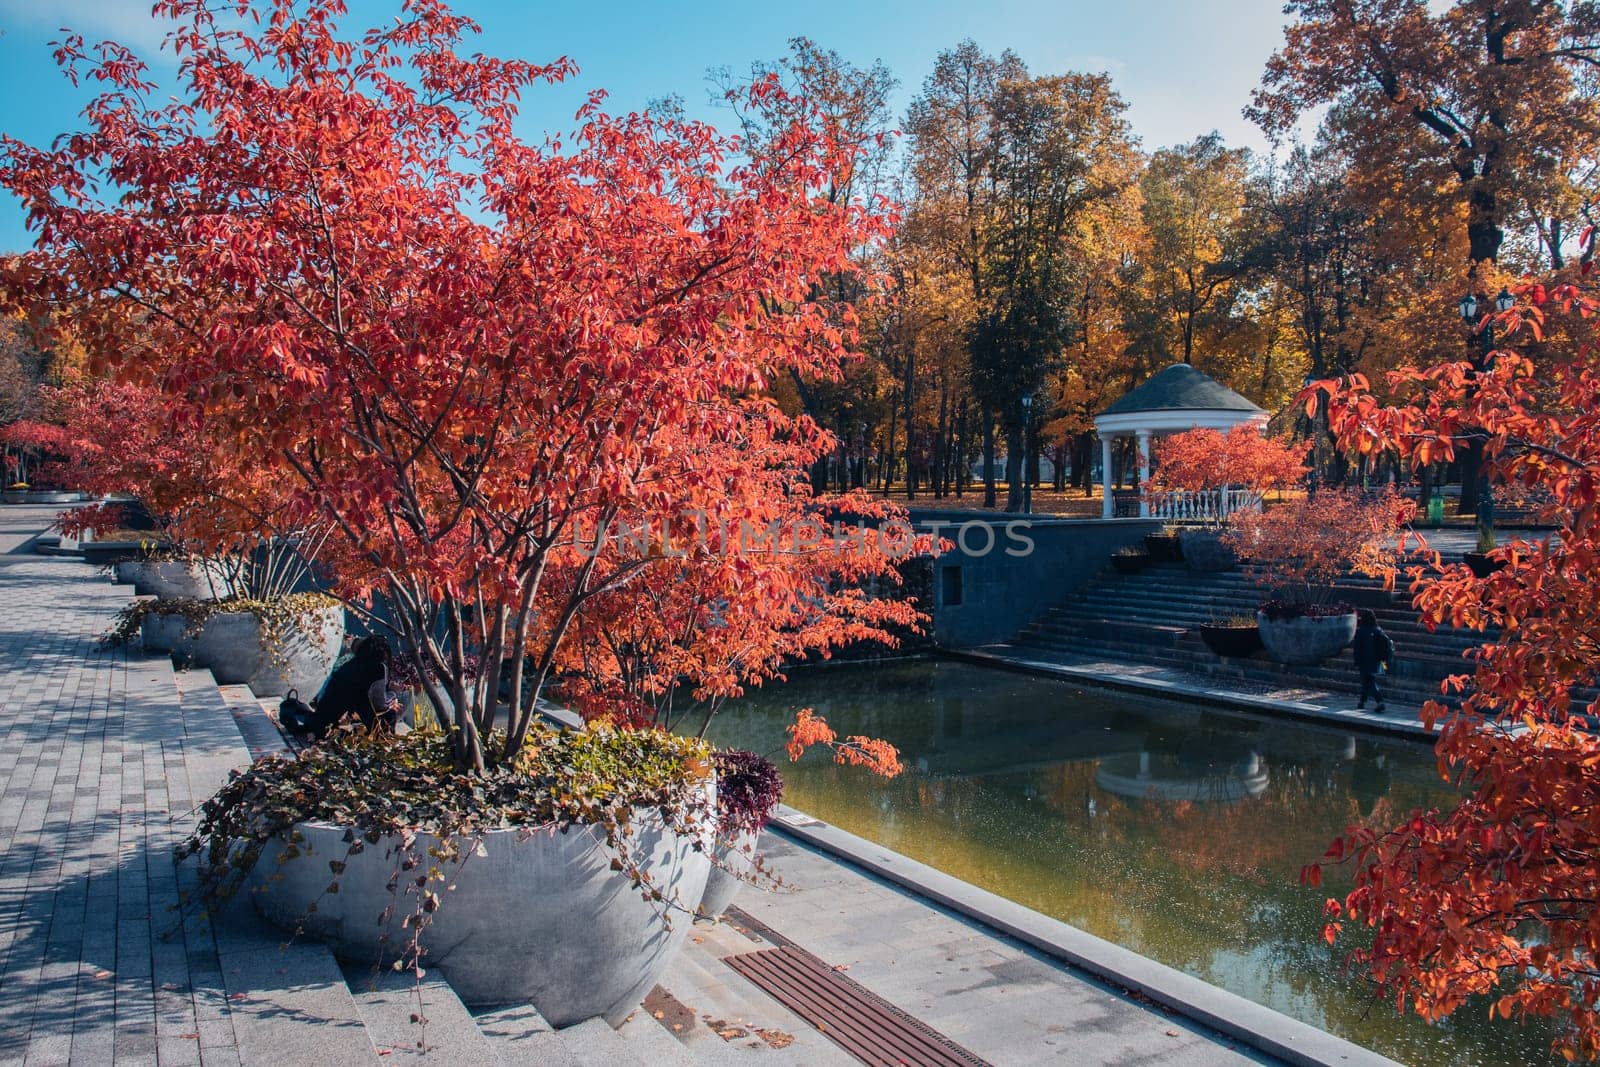 Autumn sunny morning near water concept photo. Public park by _Nataly_Nati_